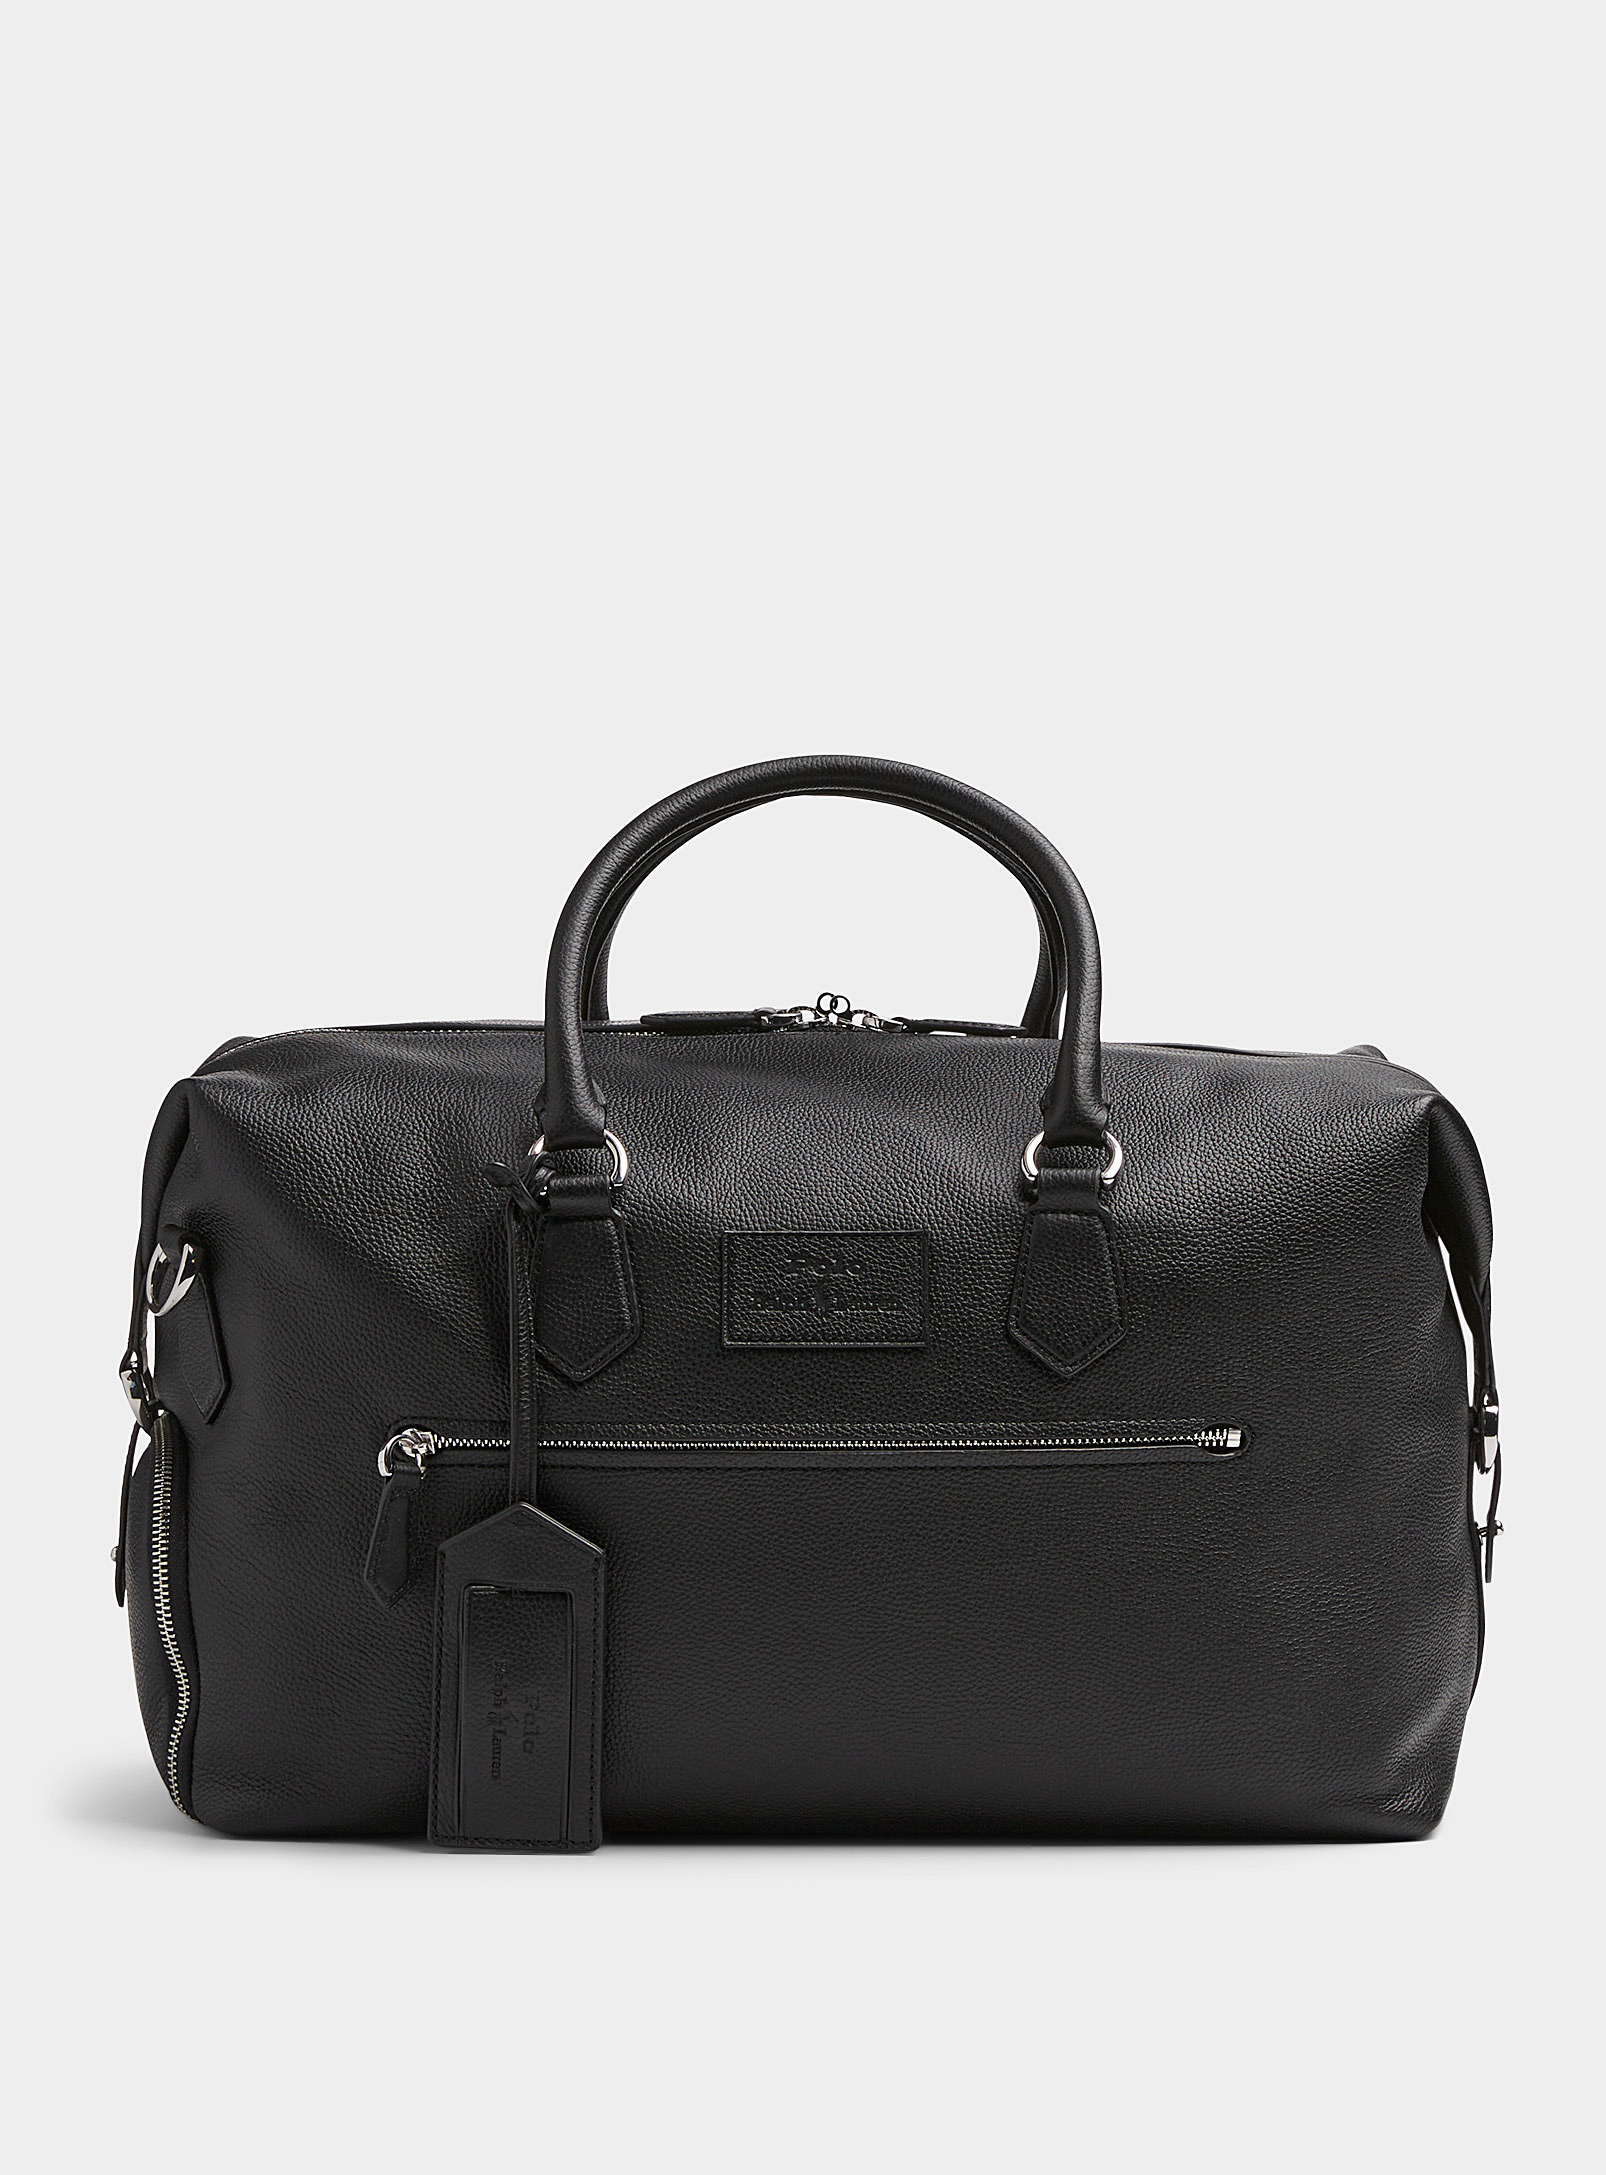 Polo Ralph Lauren Large Leather Emblem Weekend Bag In Black